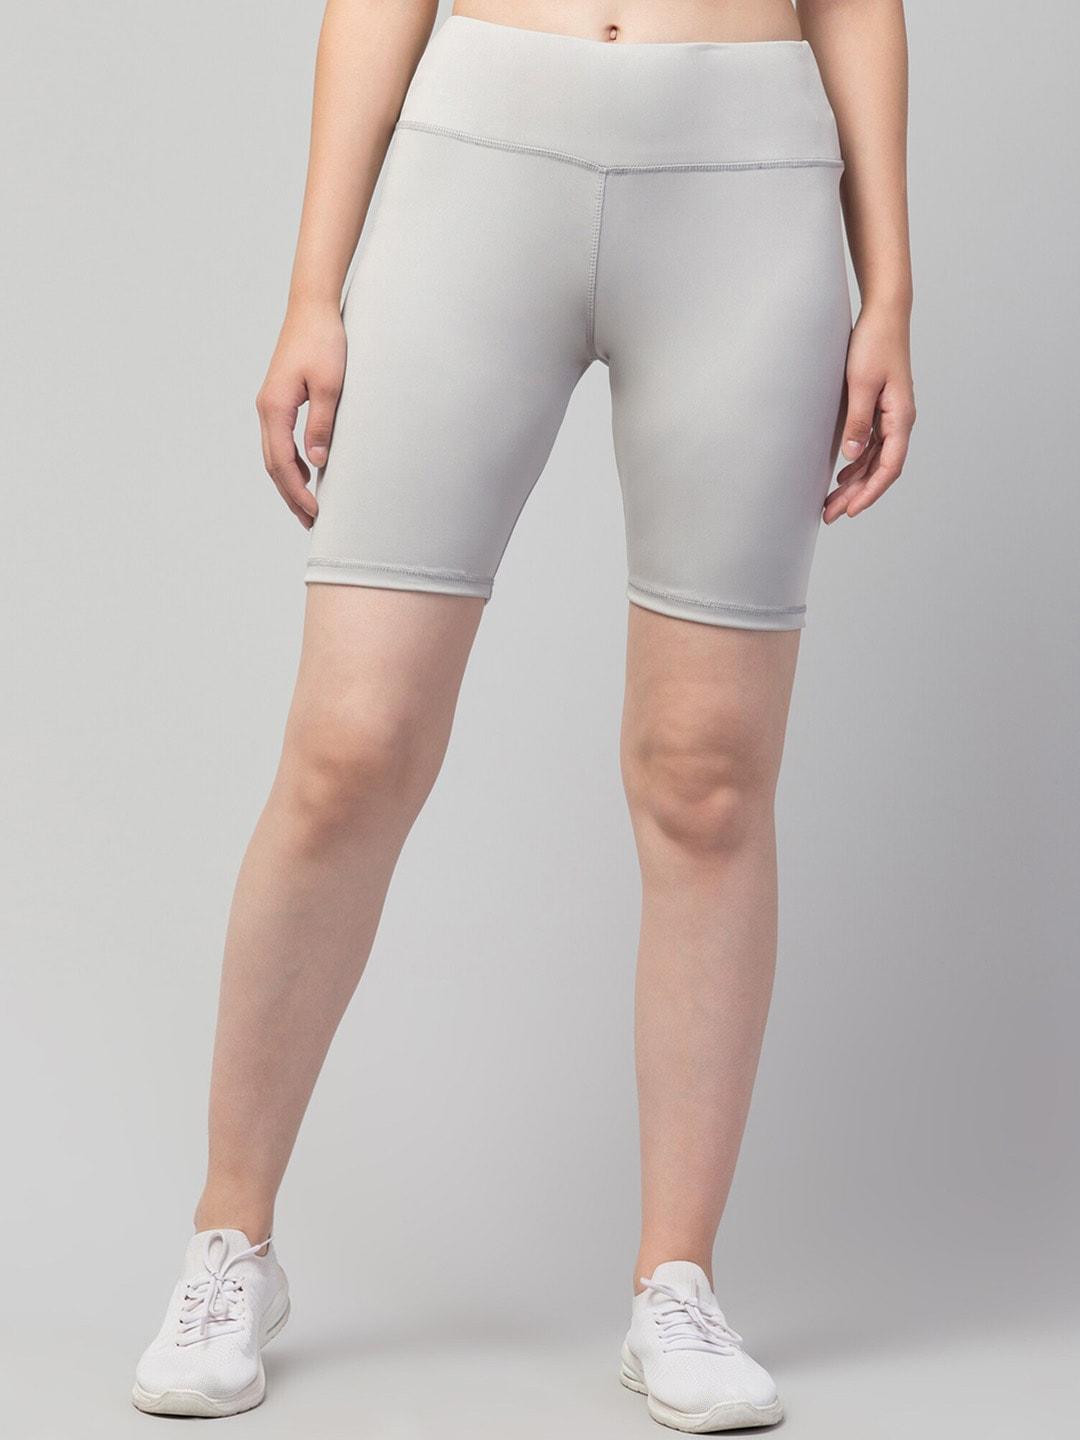 Apraa & Parma Women Skinny Fit High-Rise Yoga Sports Shorts